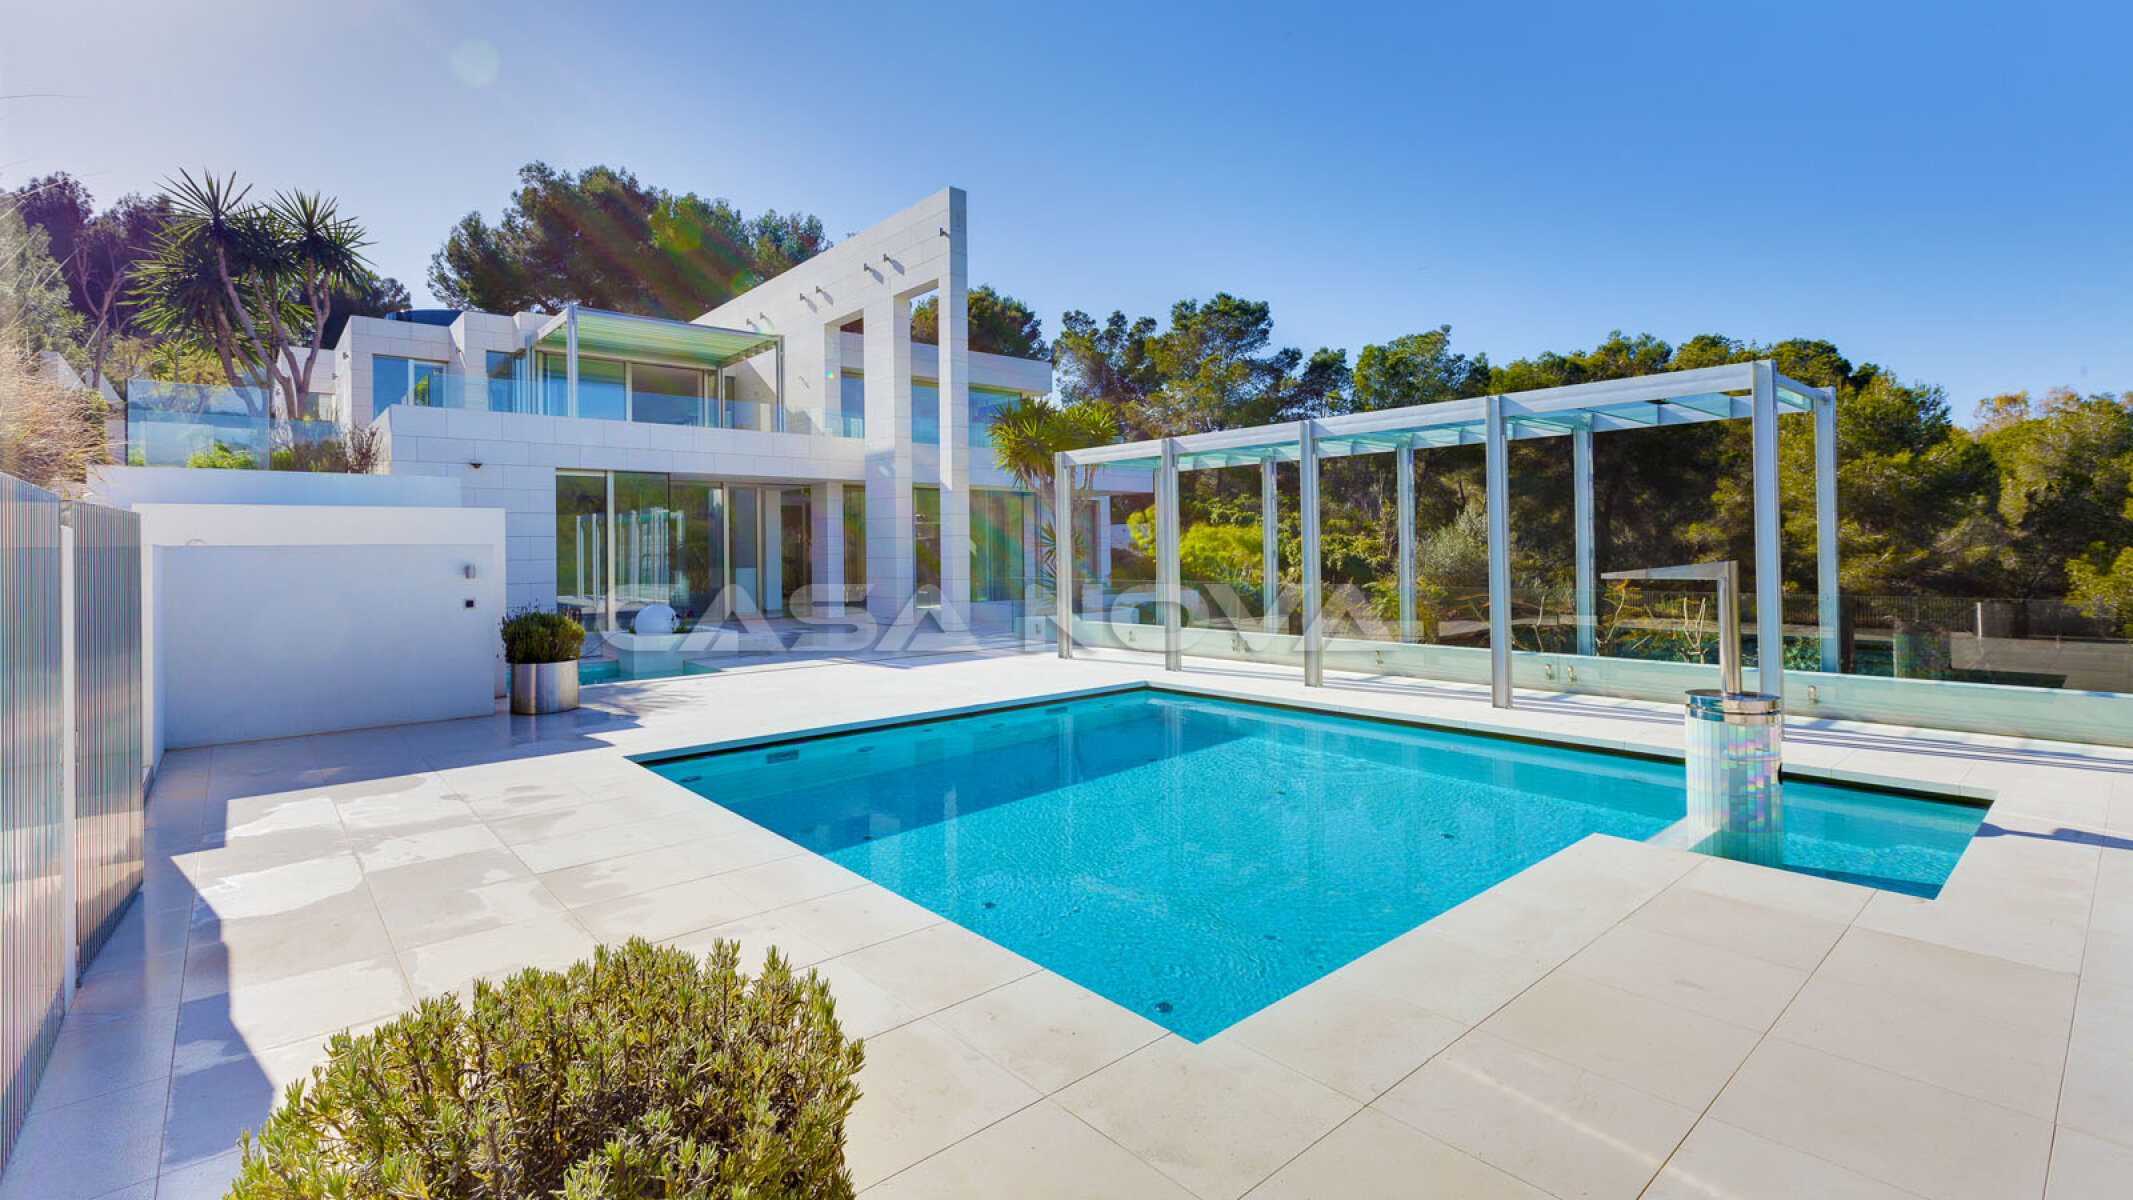 Villa de arquitecto Premium Mallorca estilo minimalista